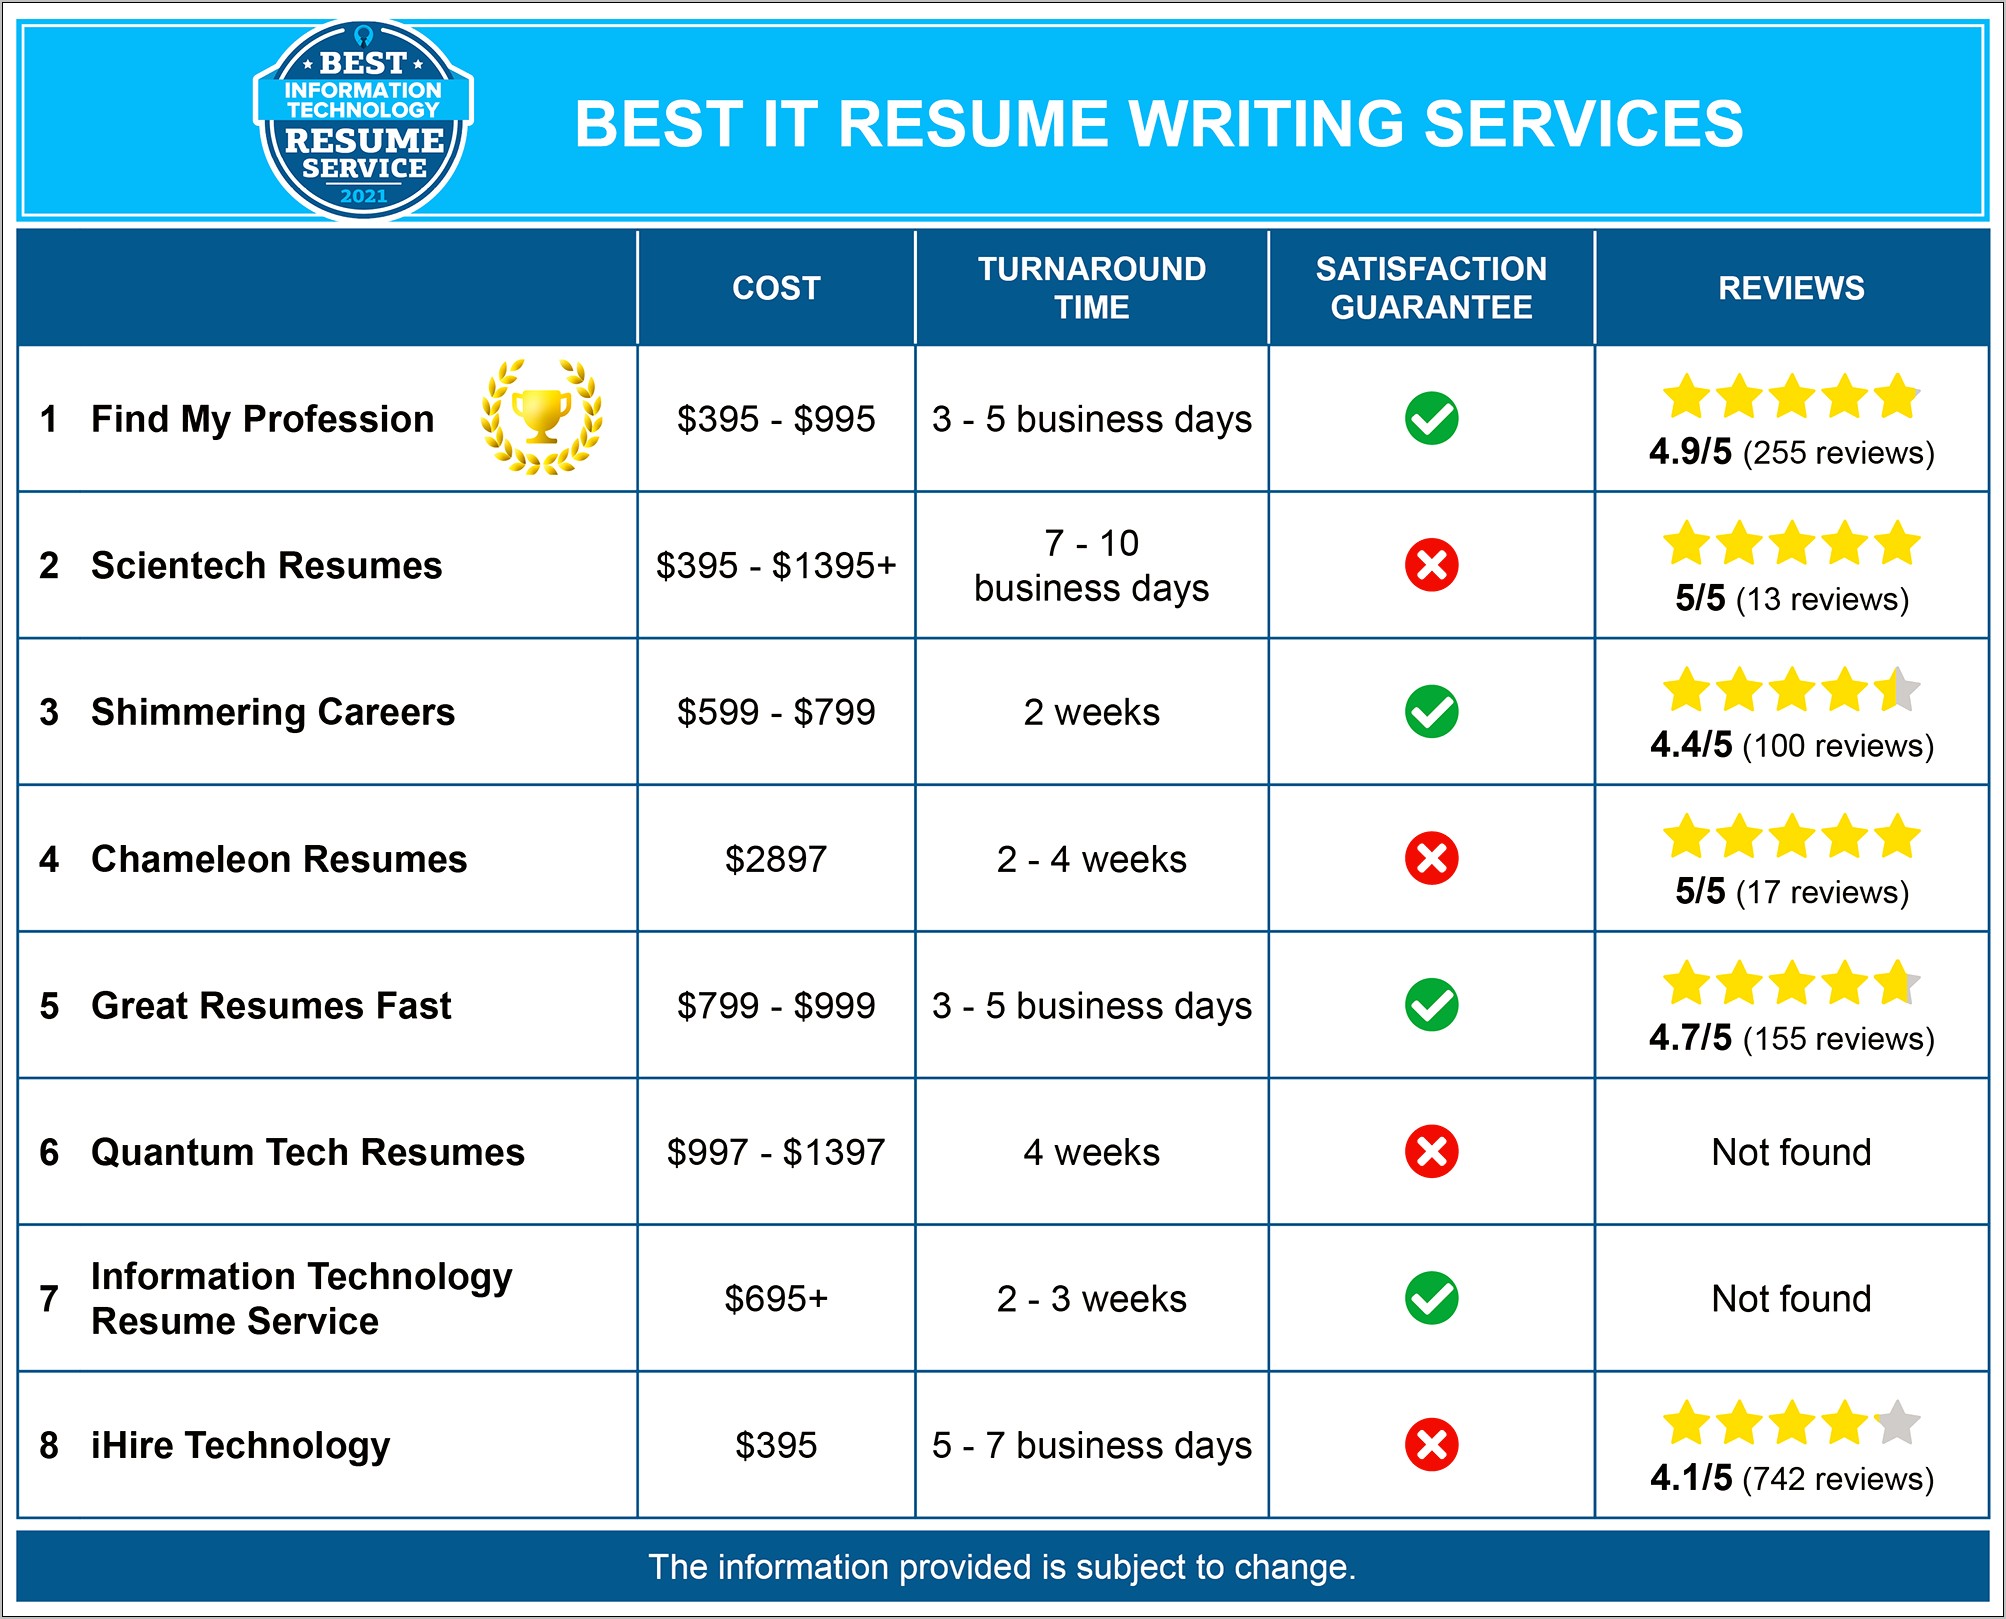 Resume For Job Top Tech Firms